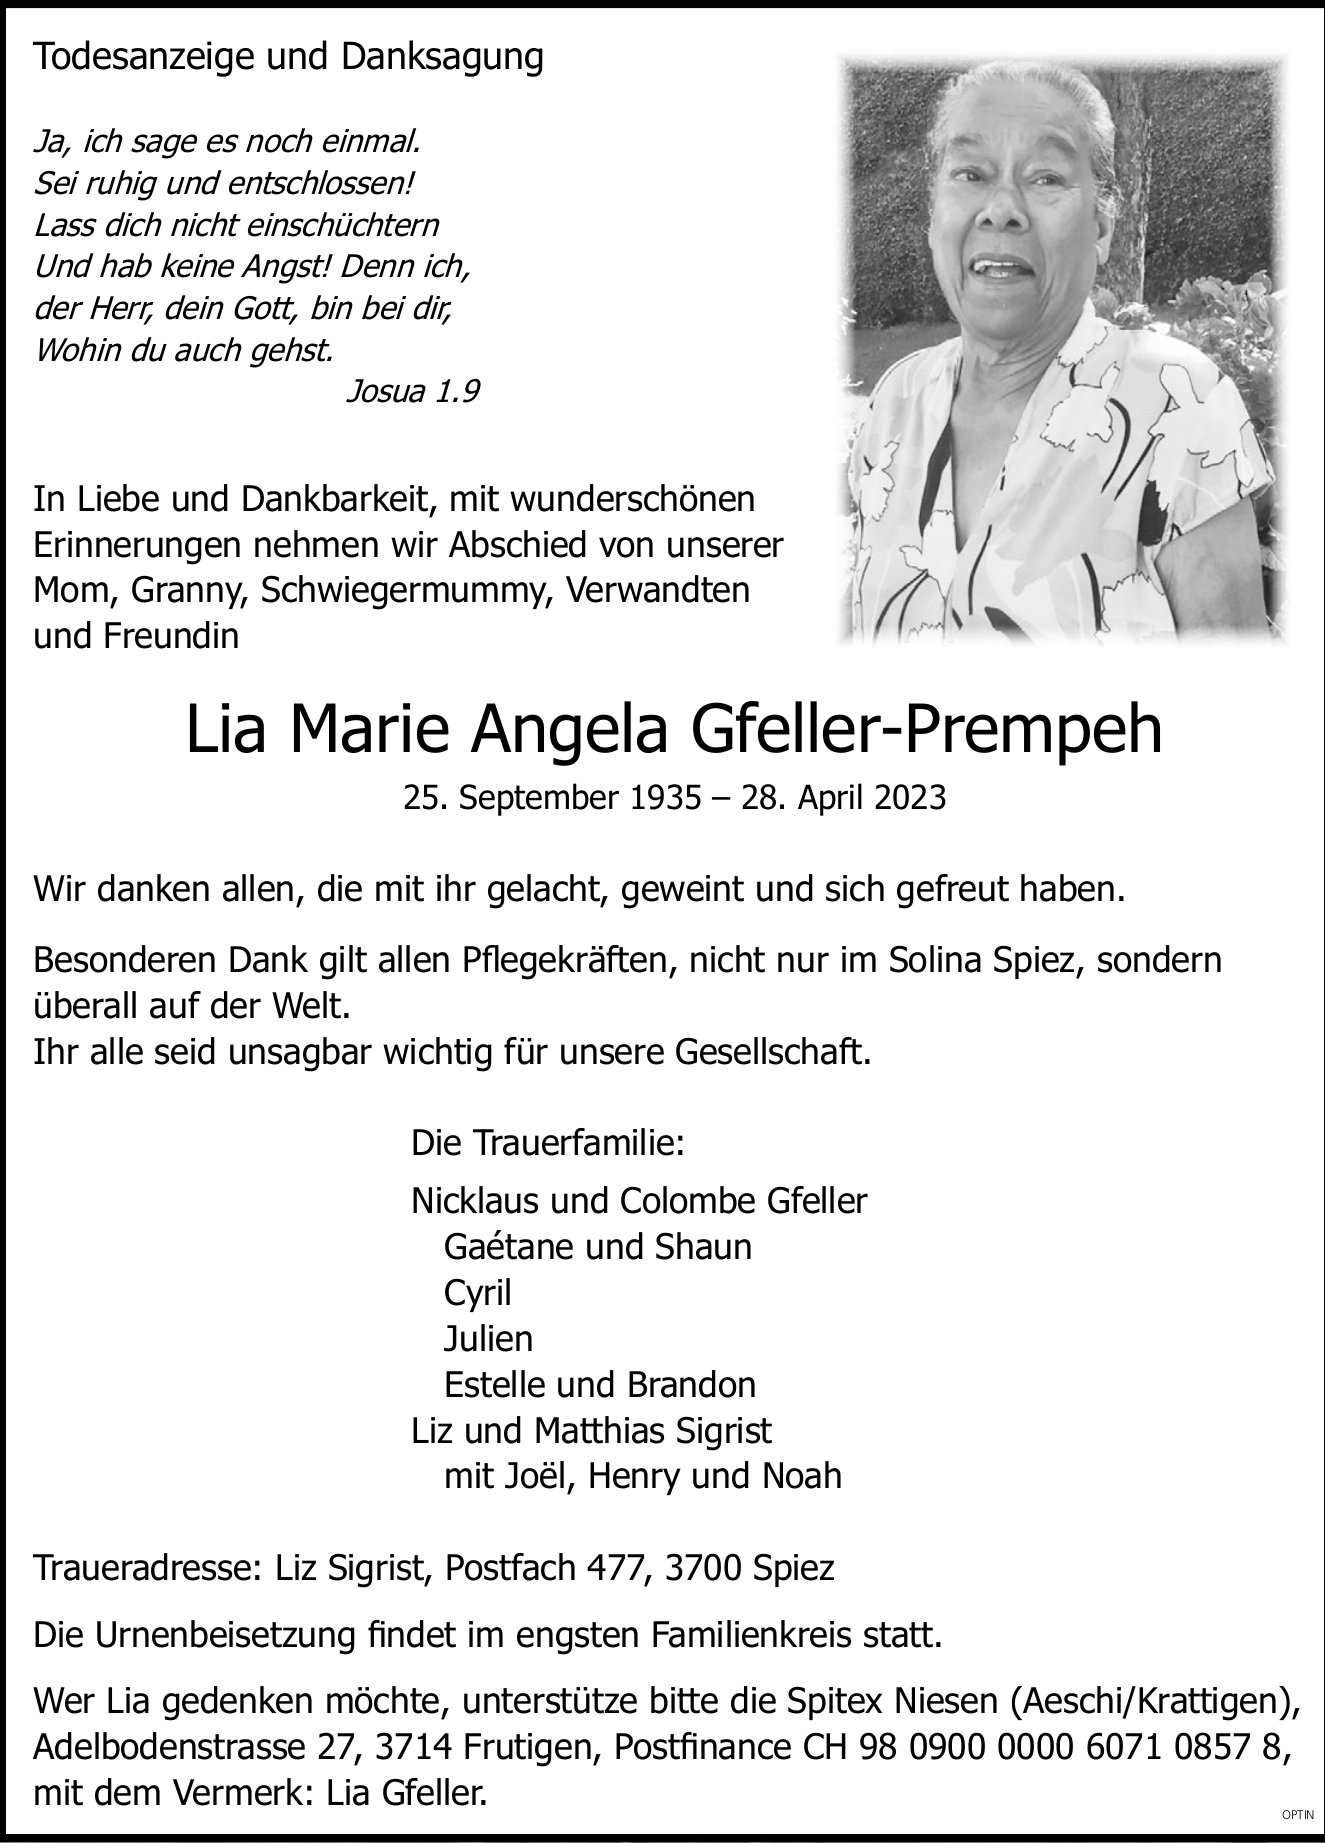 Lia Marie Angela Gfeller-Prempeh, April 2023 / TA + DS